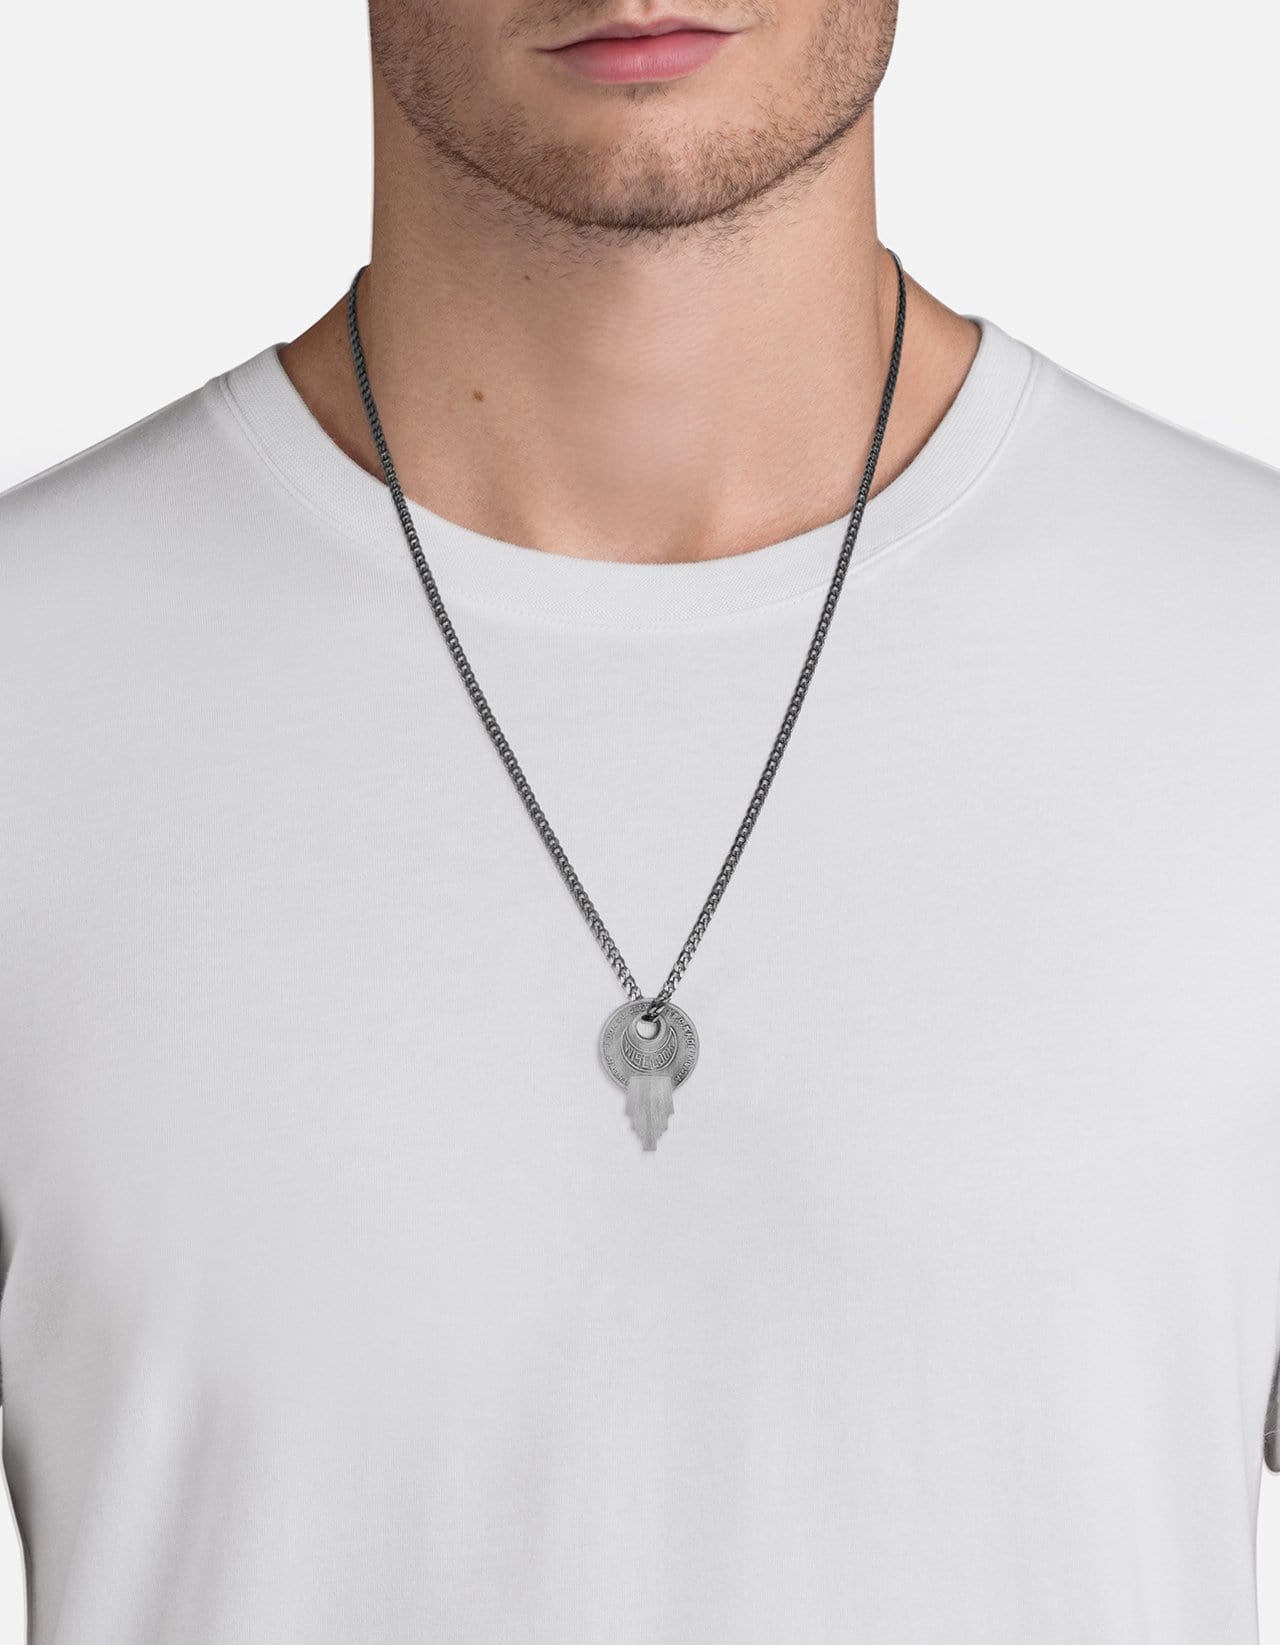 Luxurious Louis Vuitton Lock Chain Necklace for Men